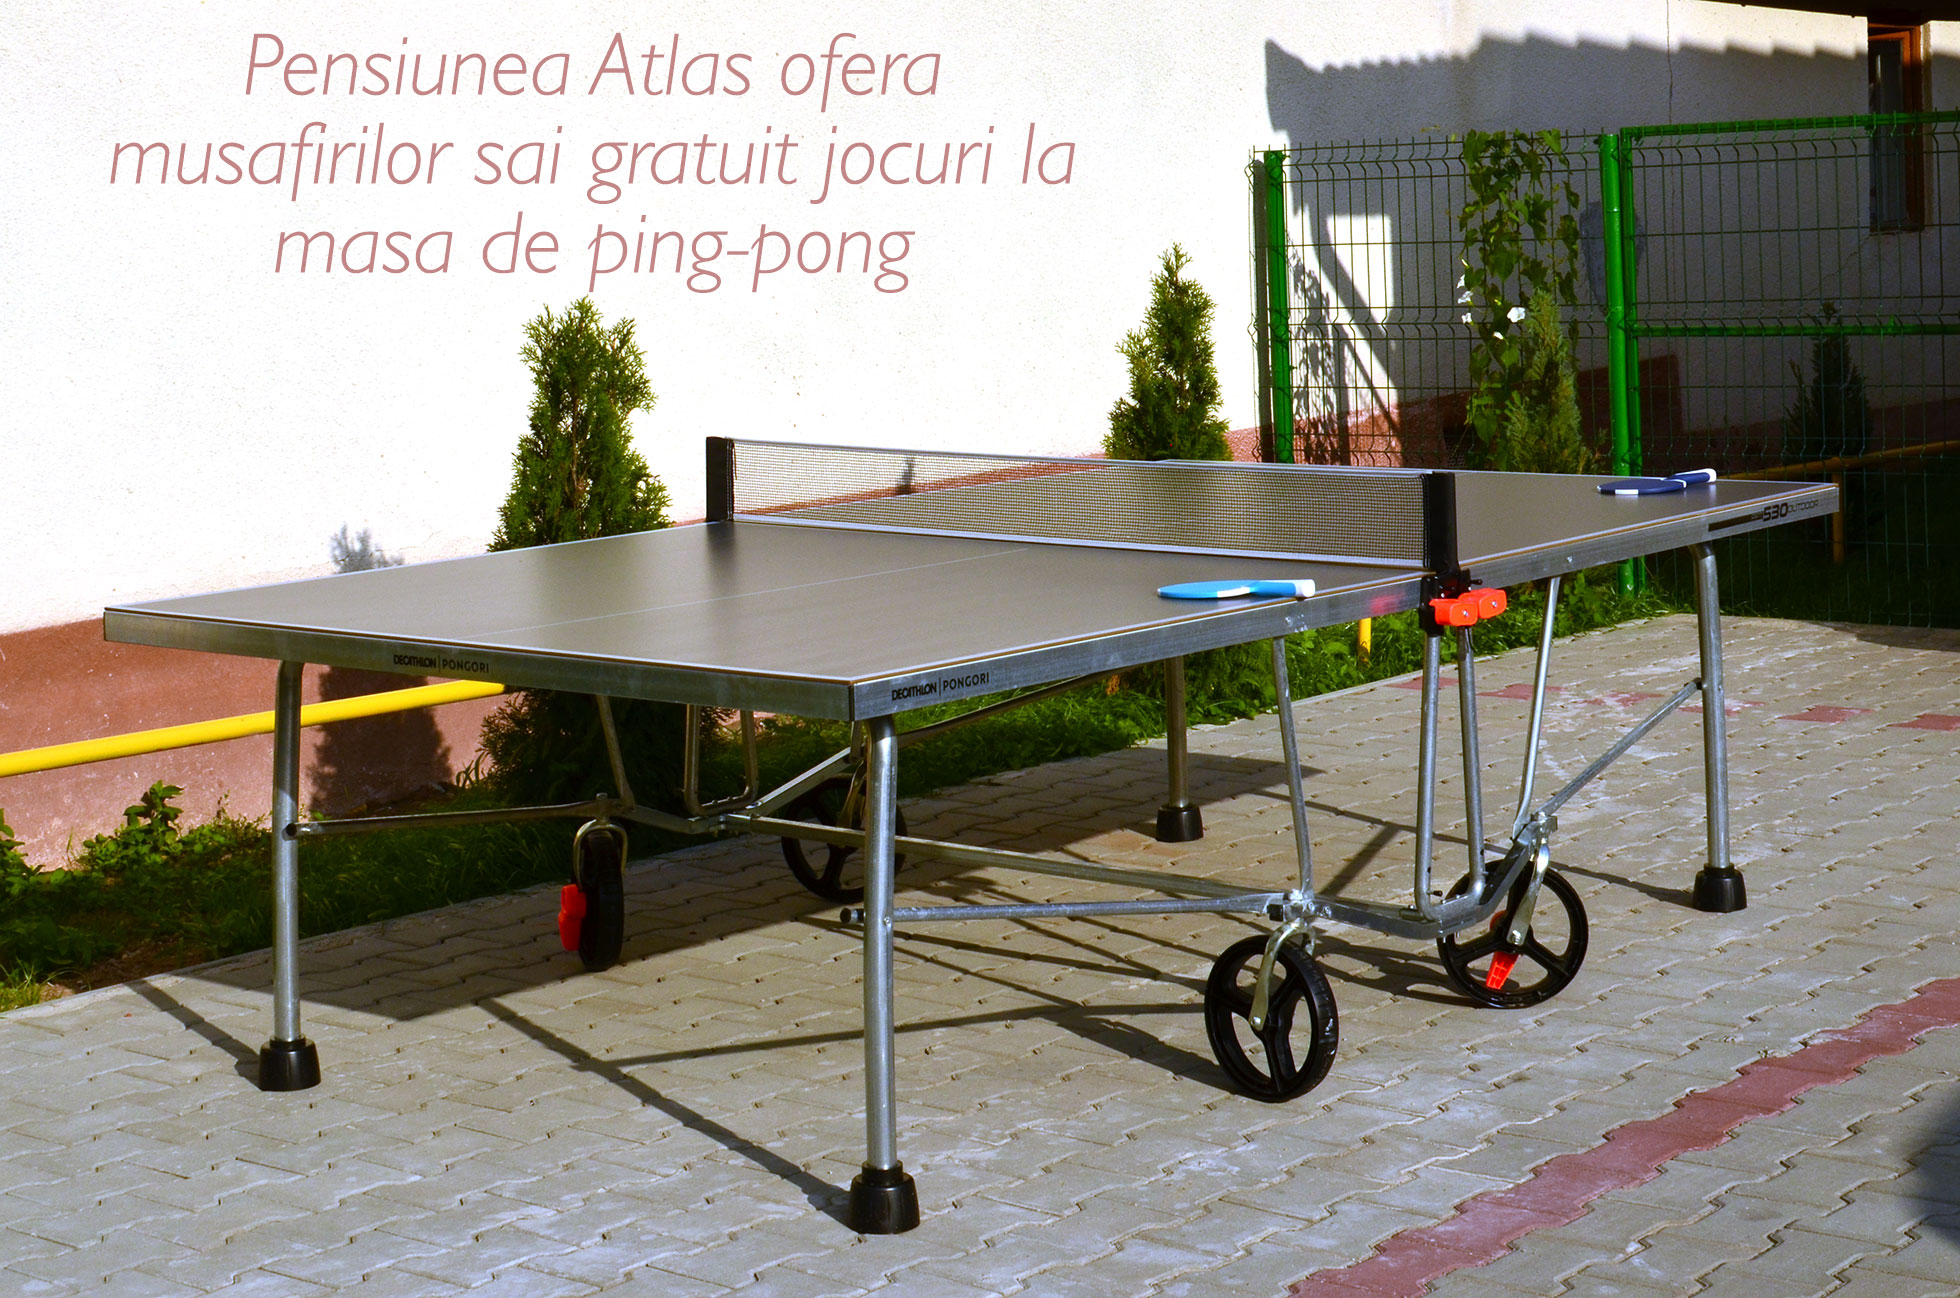 Jocuri la masa de ping-pong oferite de Pensiunea Atlas